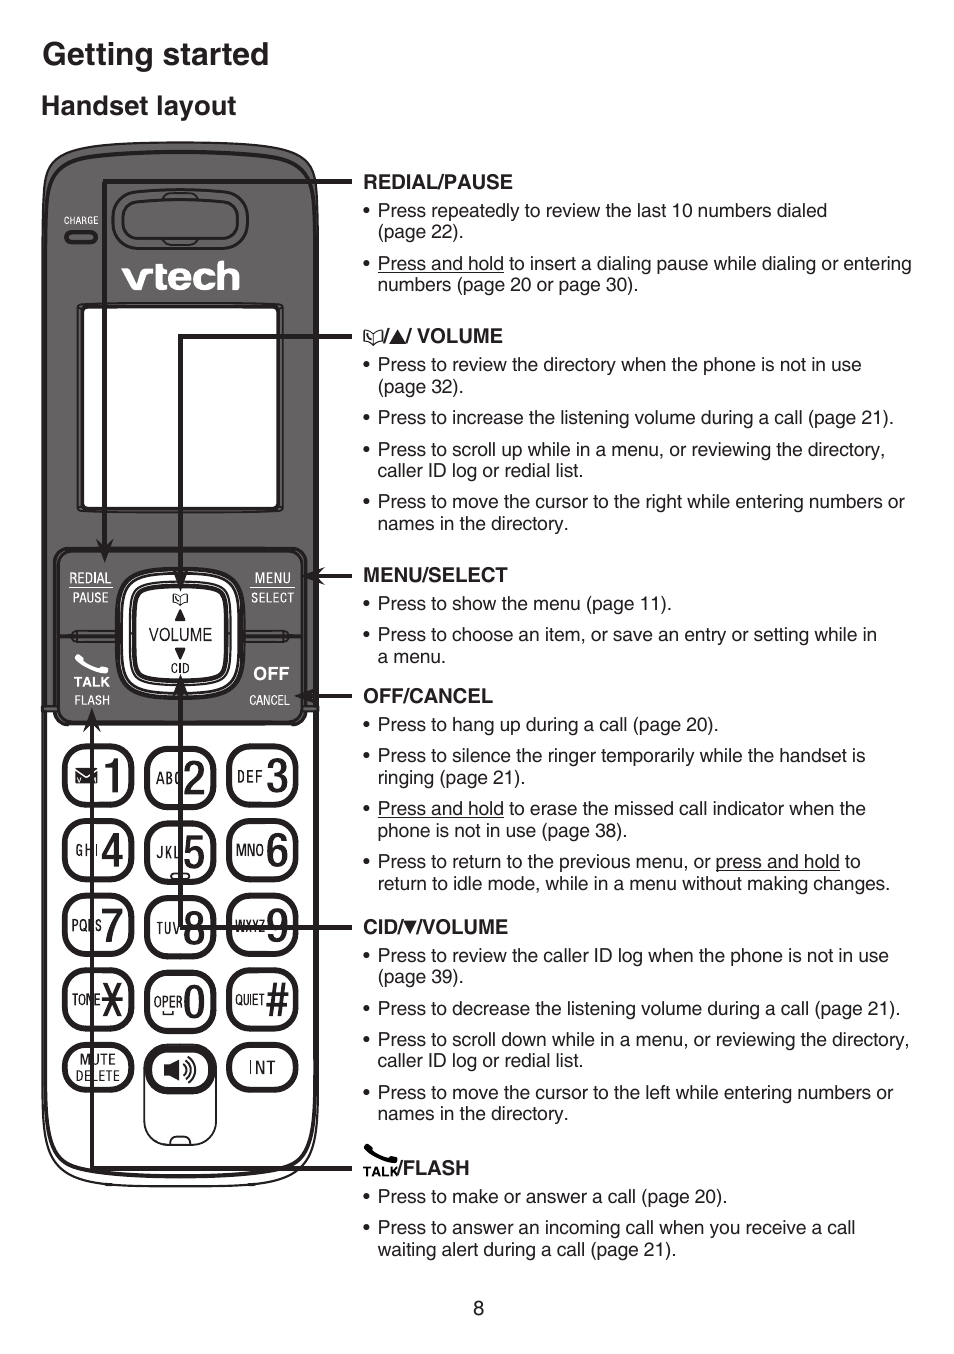 Handset layout, Getting started | VTech CS6719-2 Manual User Manual